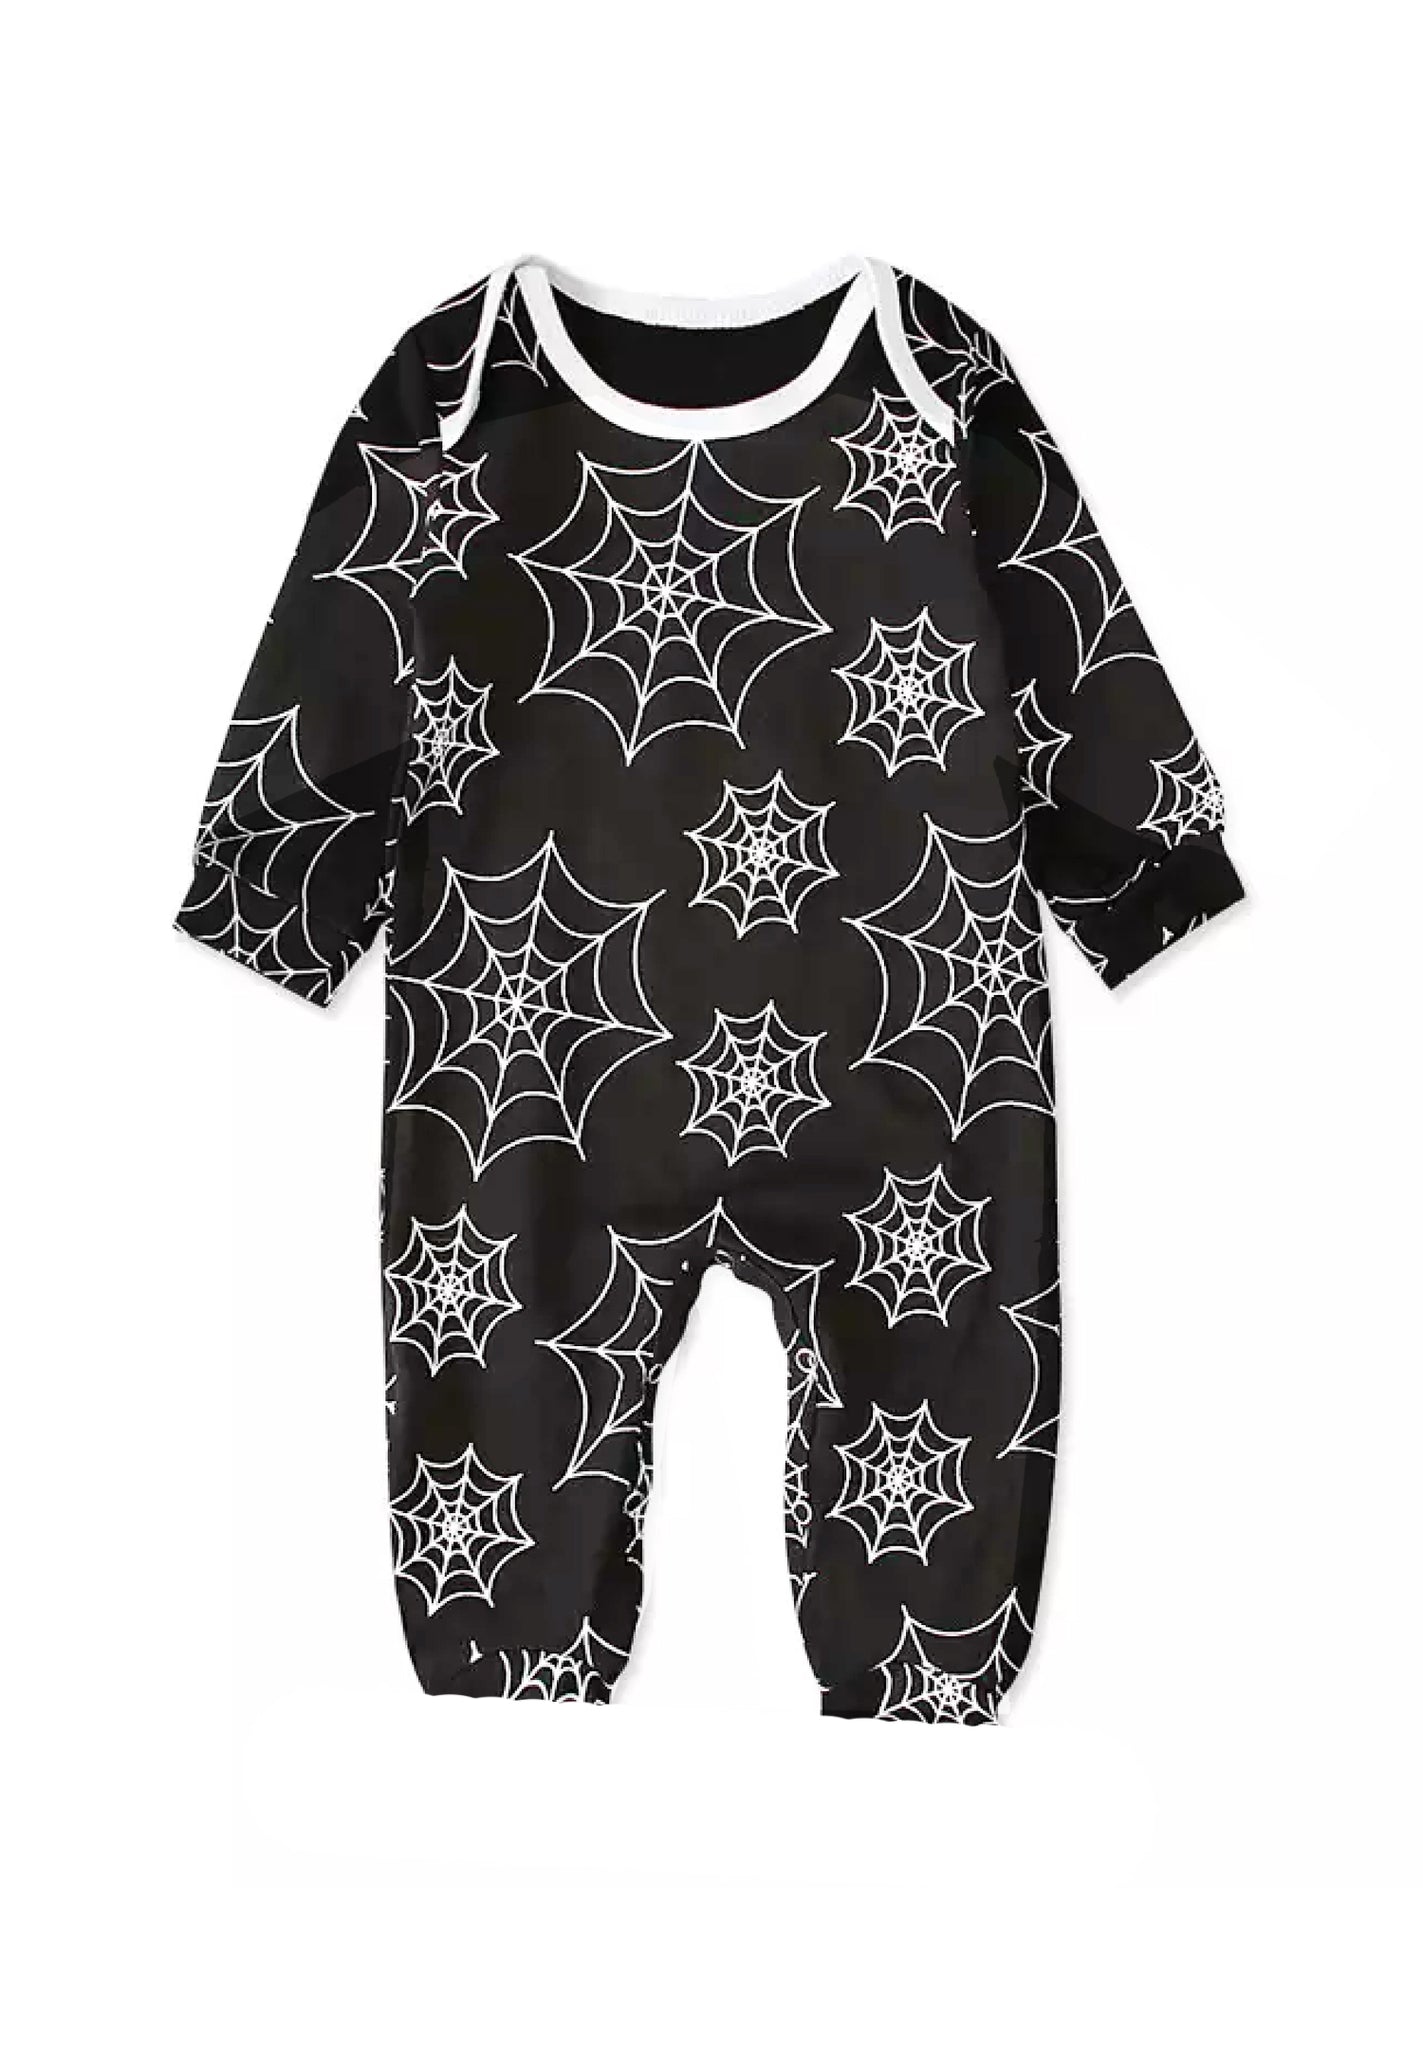 Baby Spiderweb Black Long Bodysuit Onesie